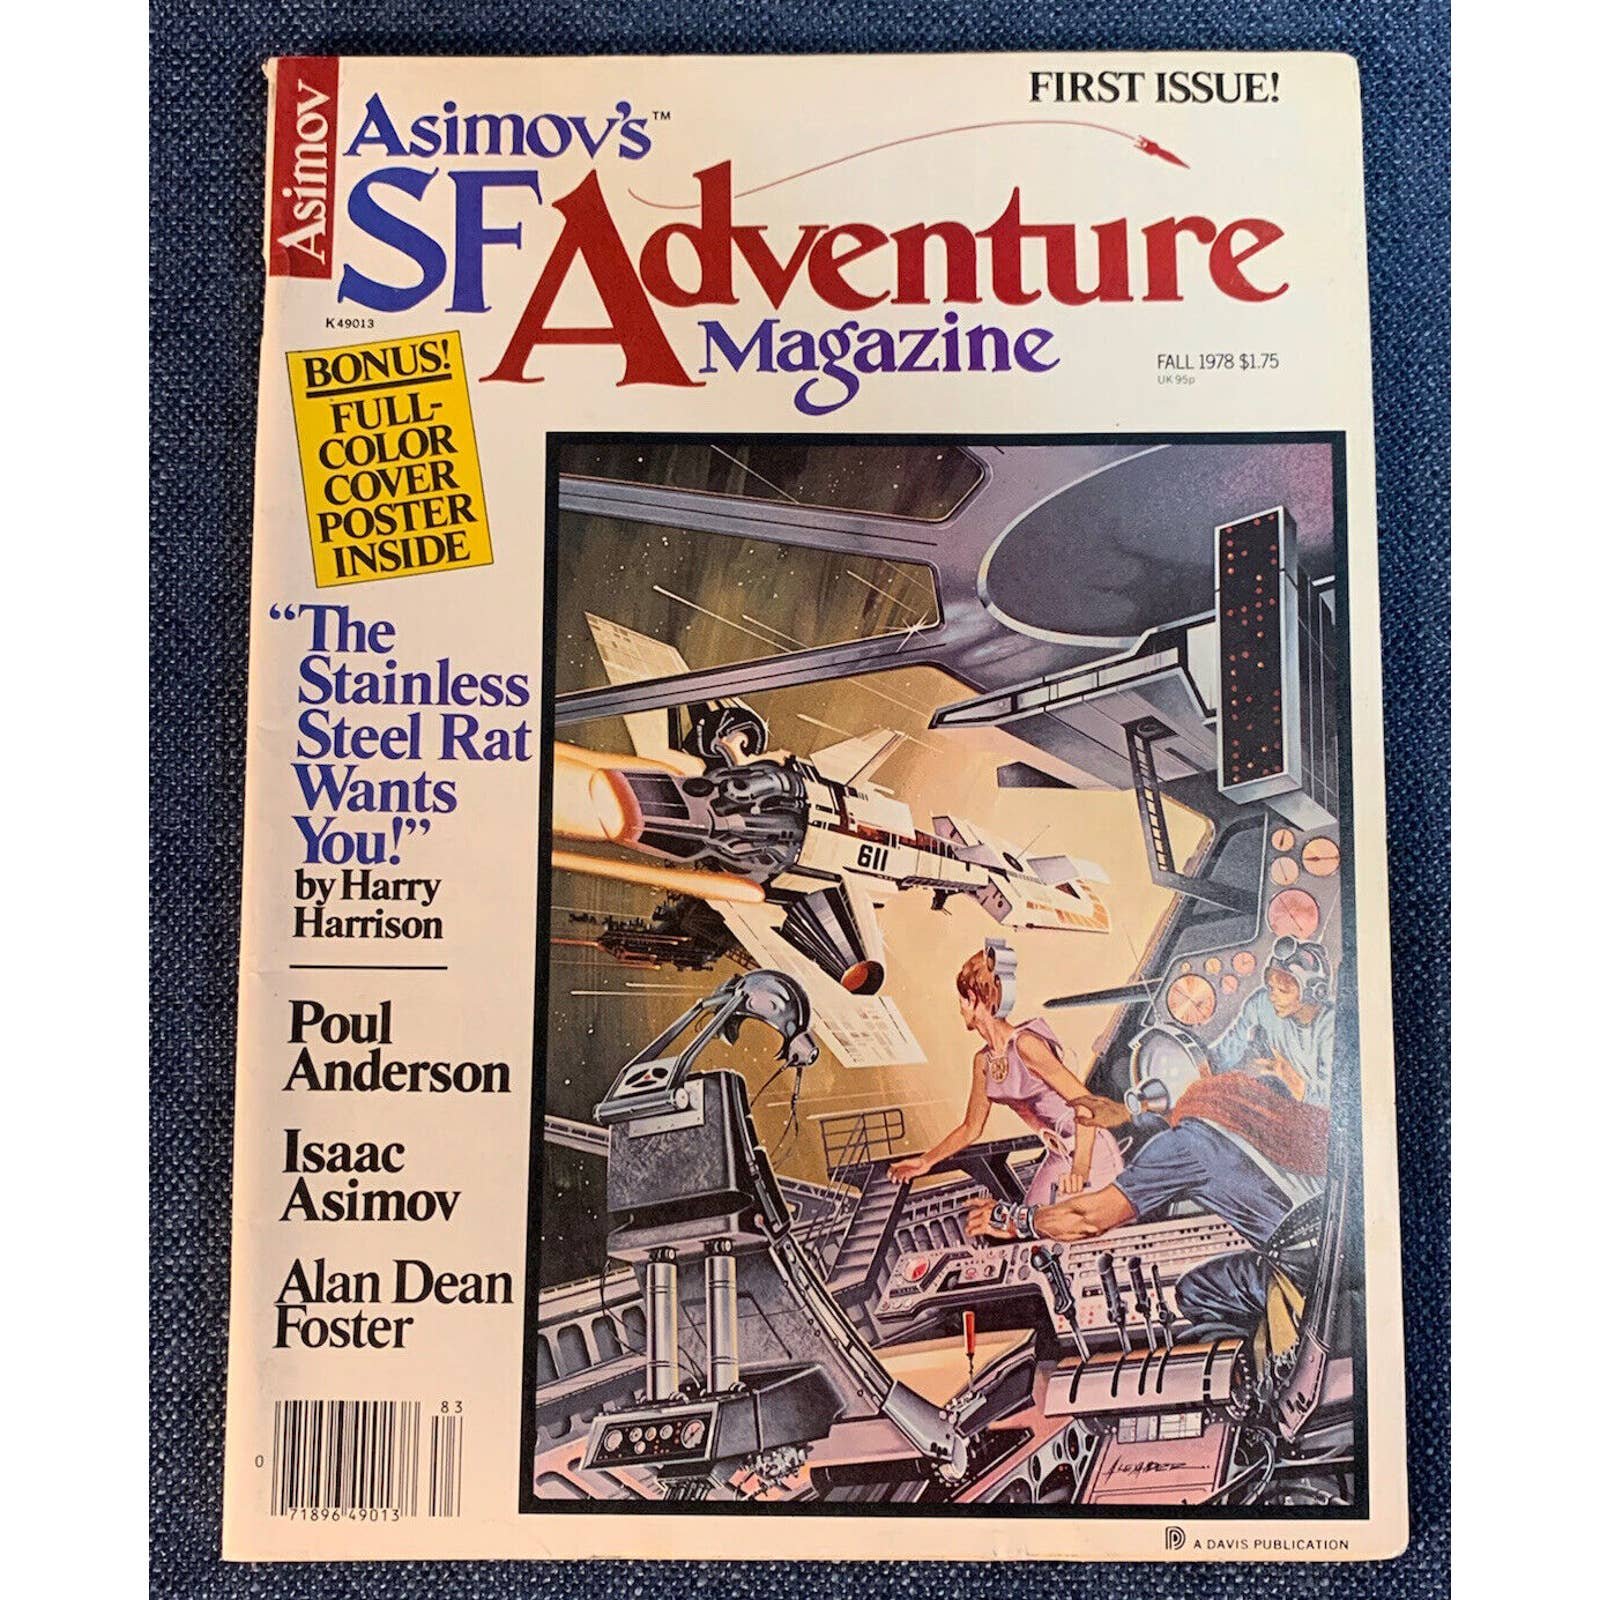 Asimov SF Adventure Magazine 1978 First Issue No Poster Good Condition 6JLPQ3iHE